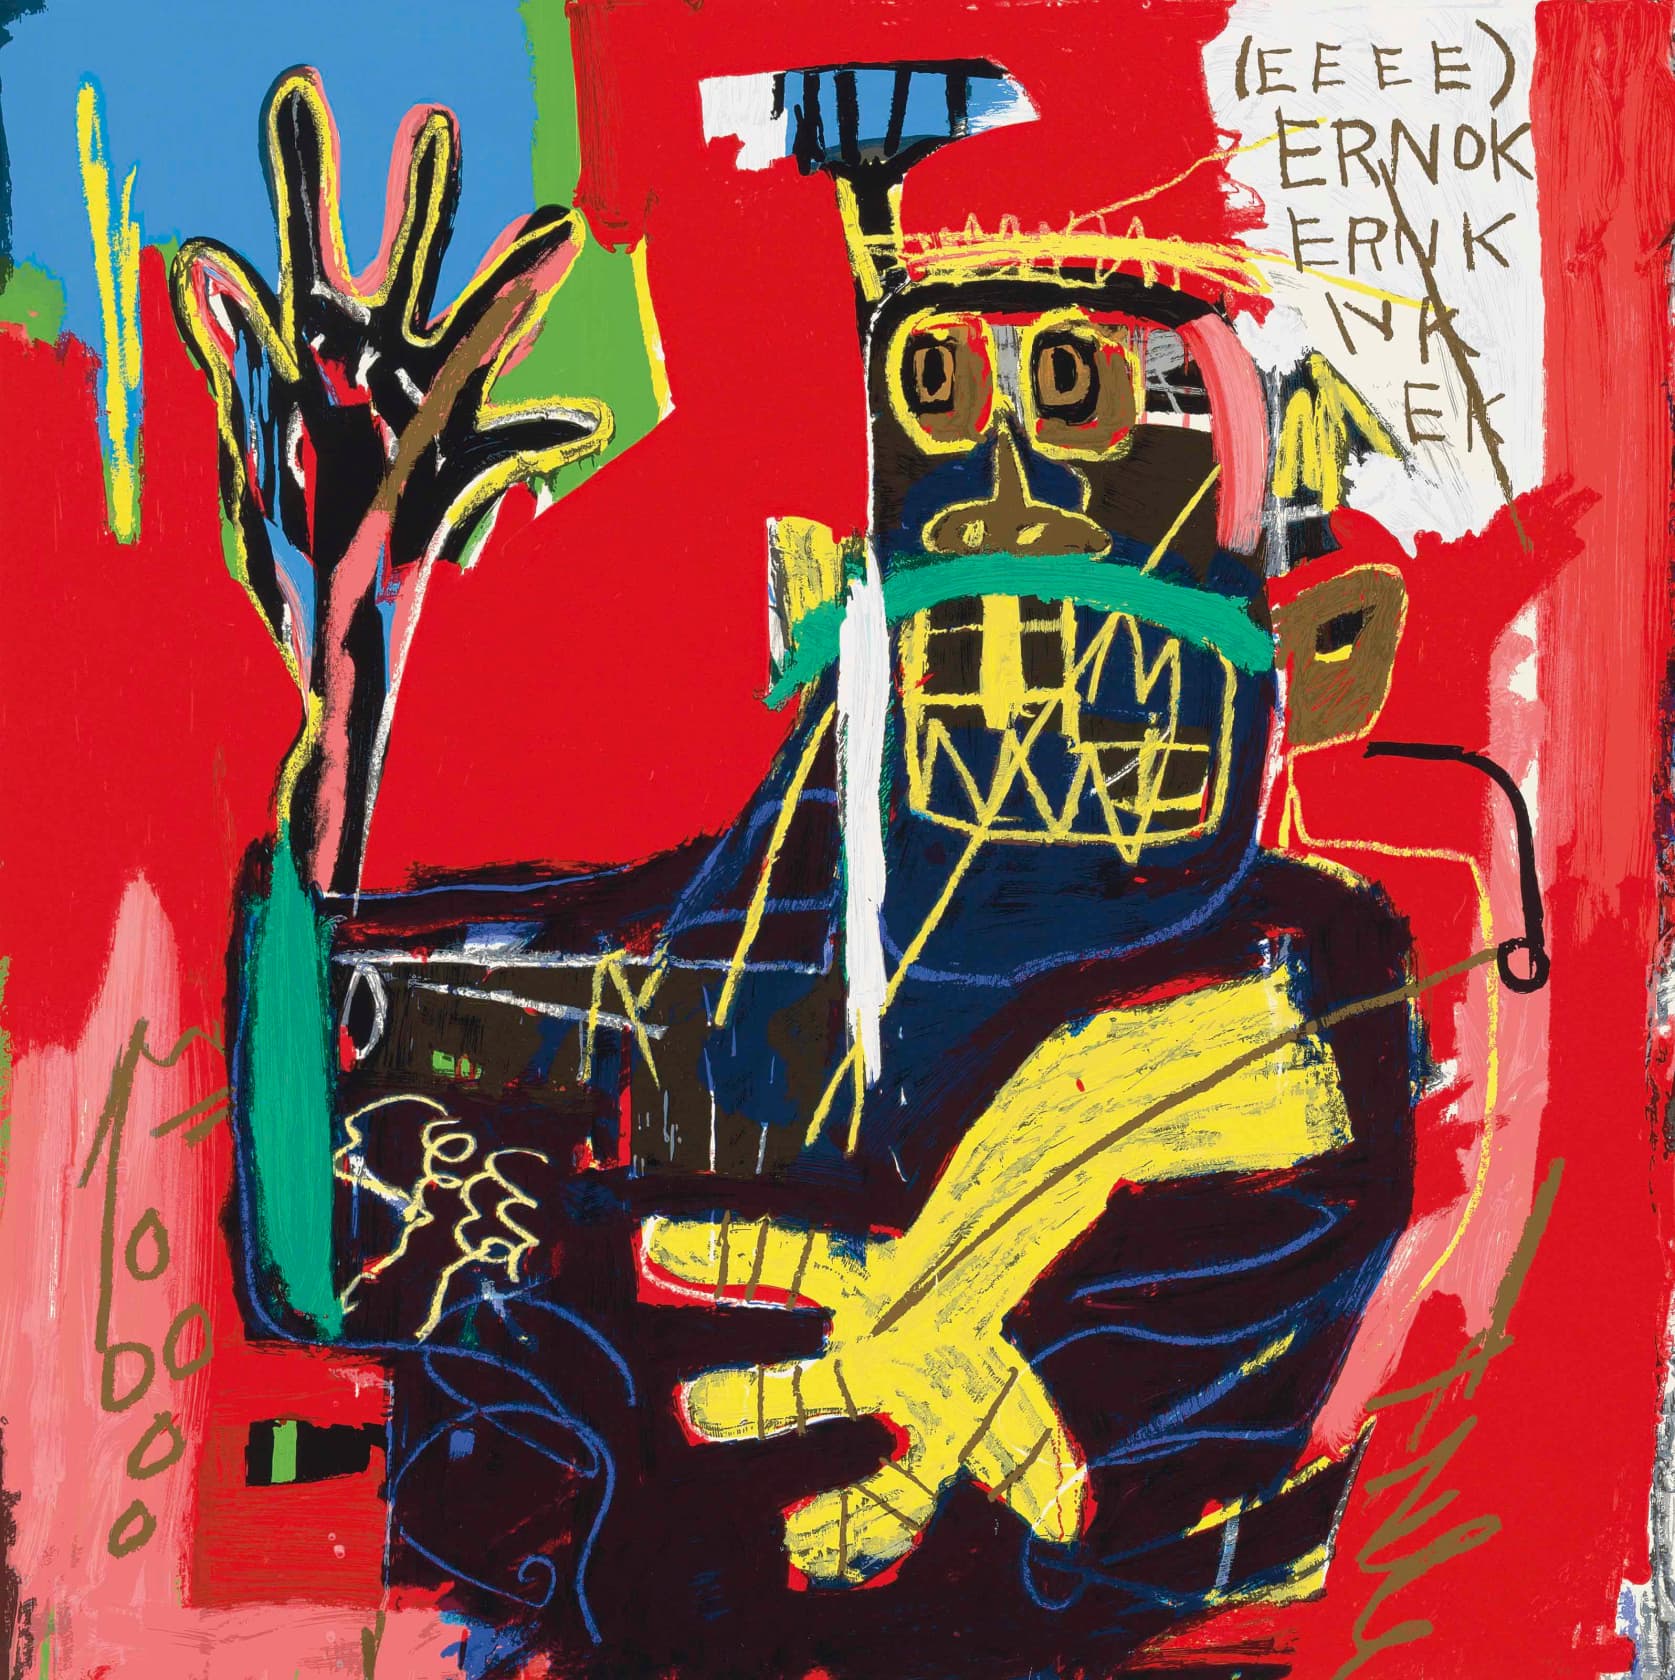 Jean-Michel Basquiat, Ernok, 1983/2001